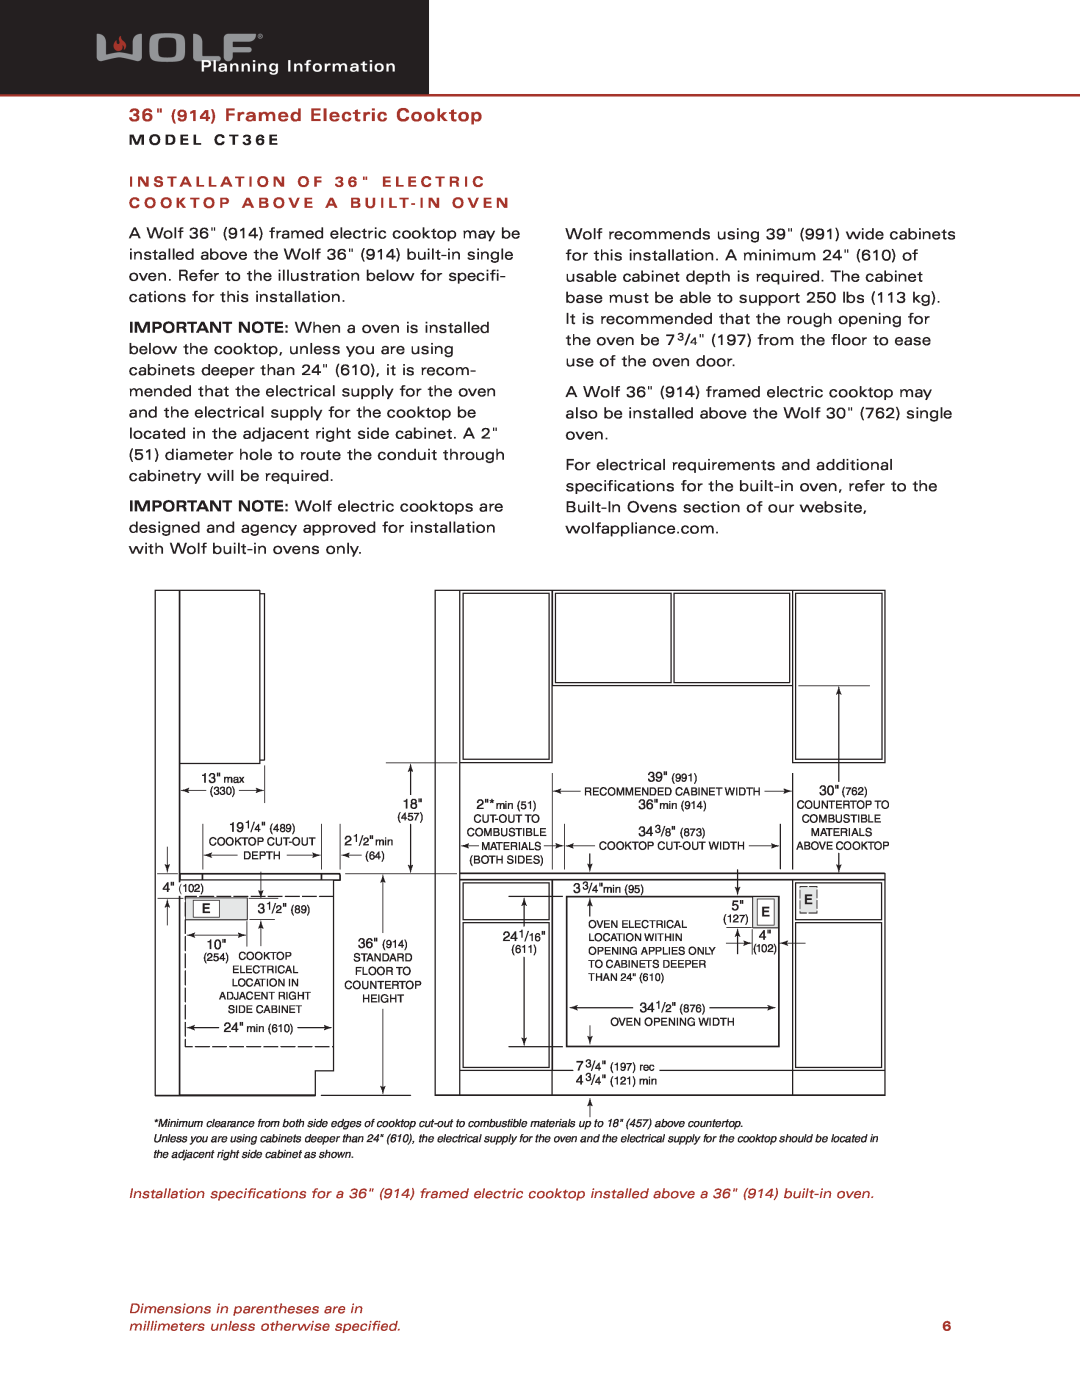 Sub-Zero CT36E dimensions 36 914 Framed Electric Cooktop, Planning Information, M O D E L C T 3 6 E 